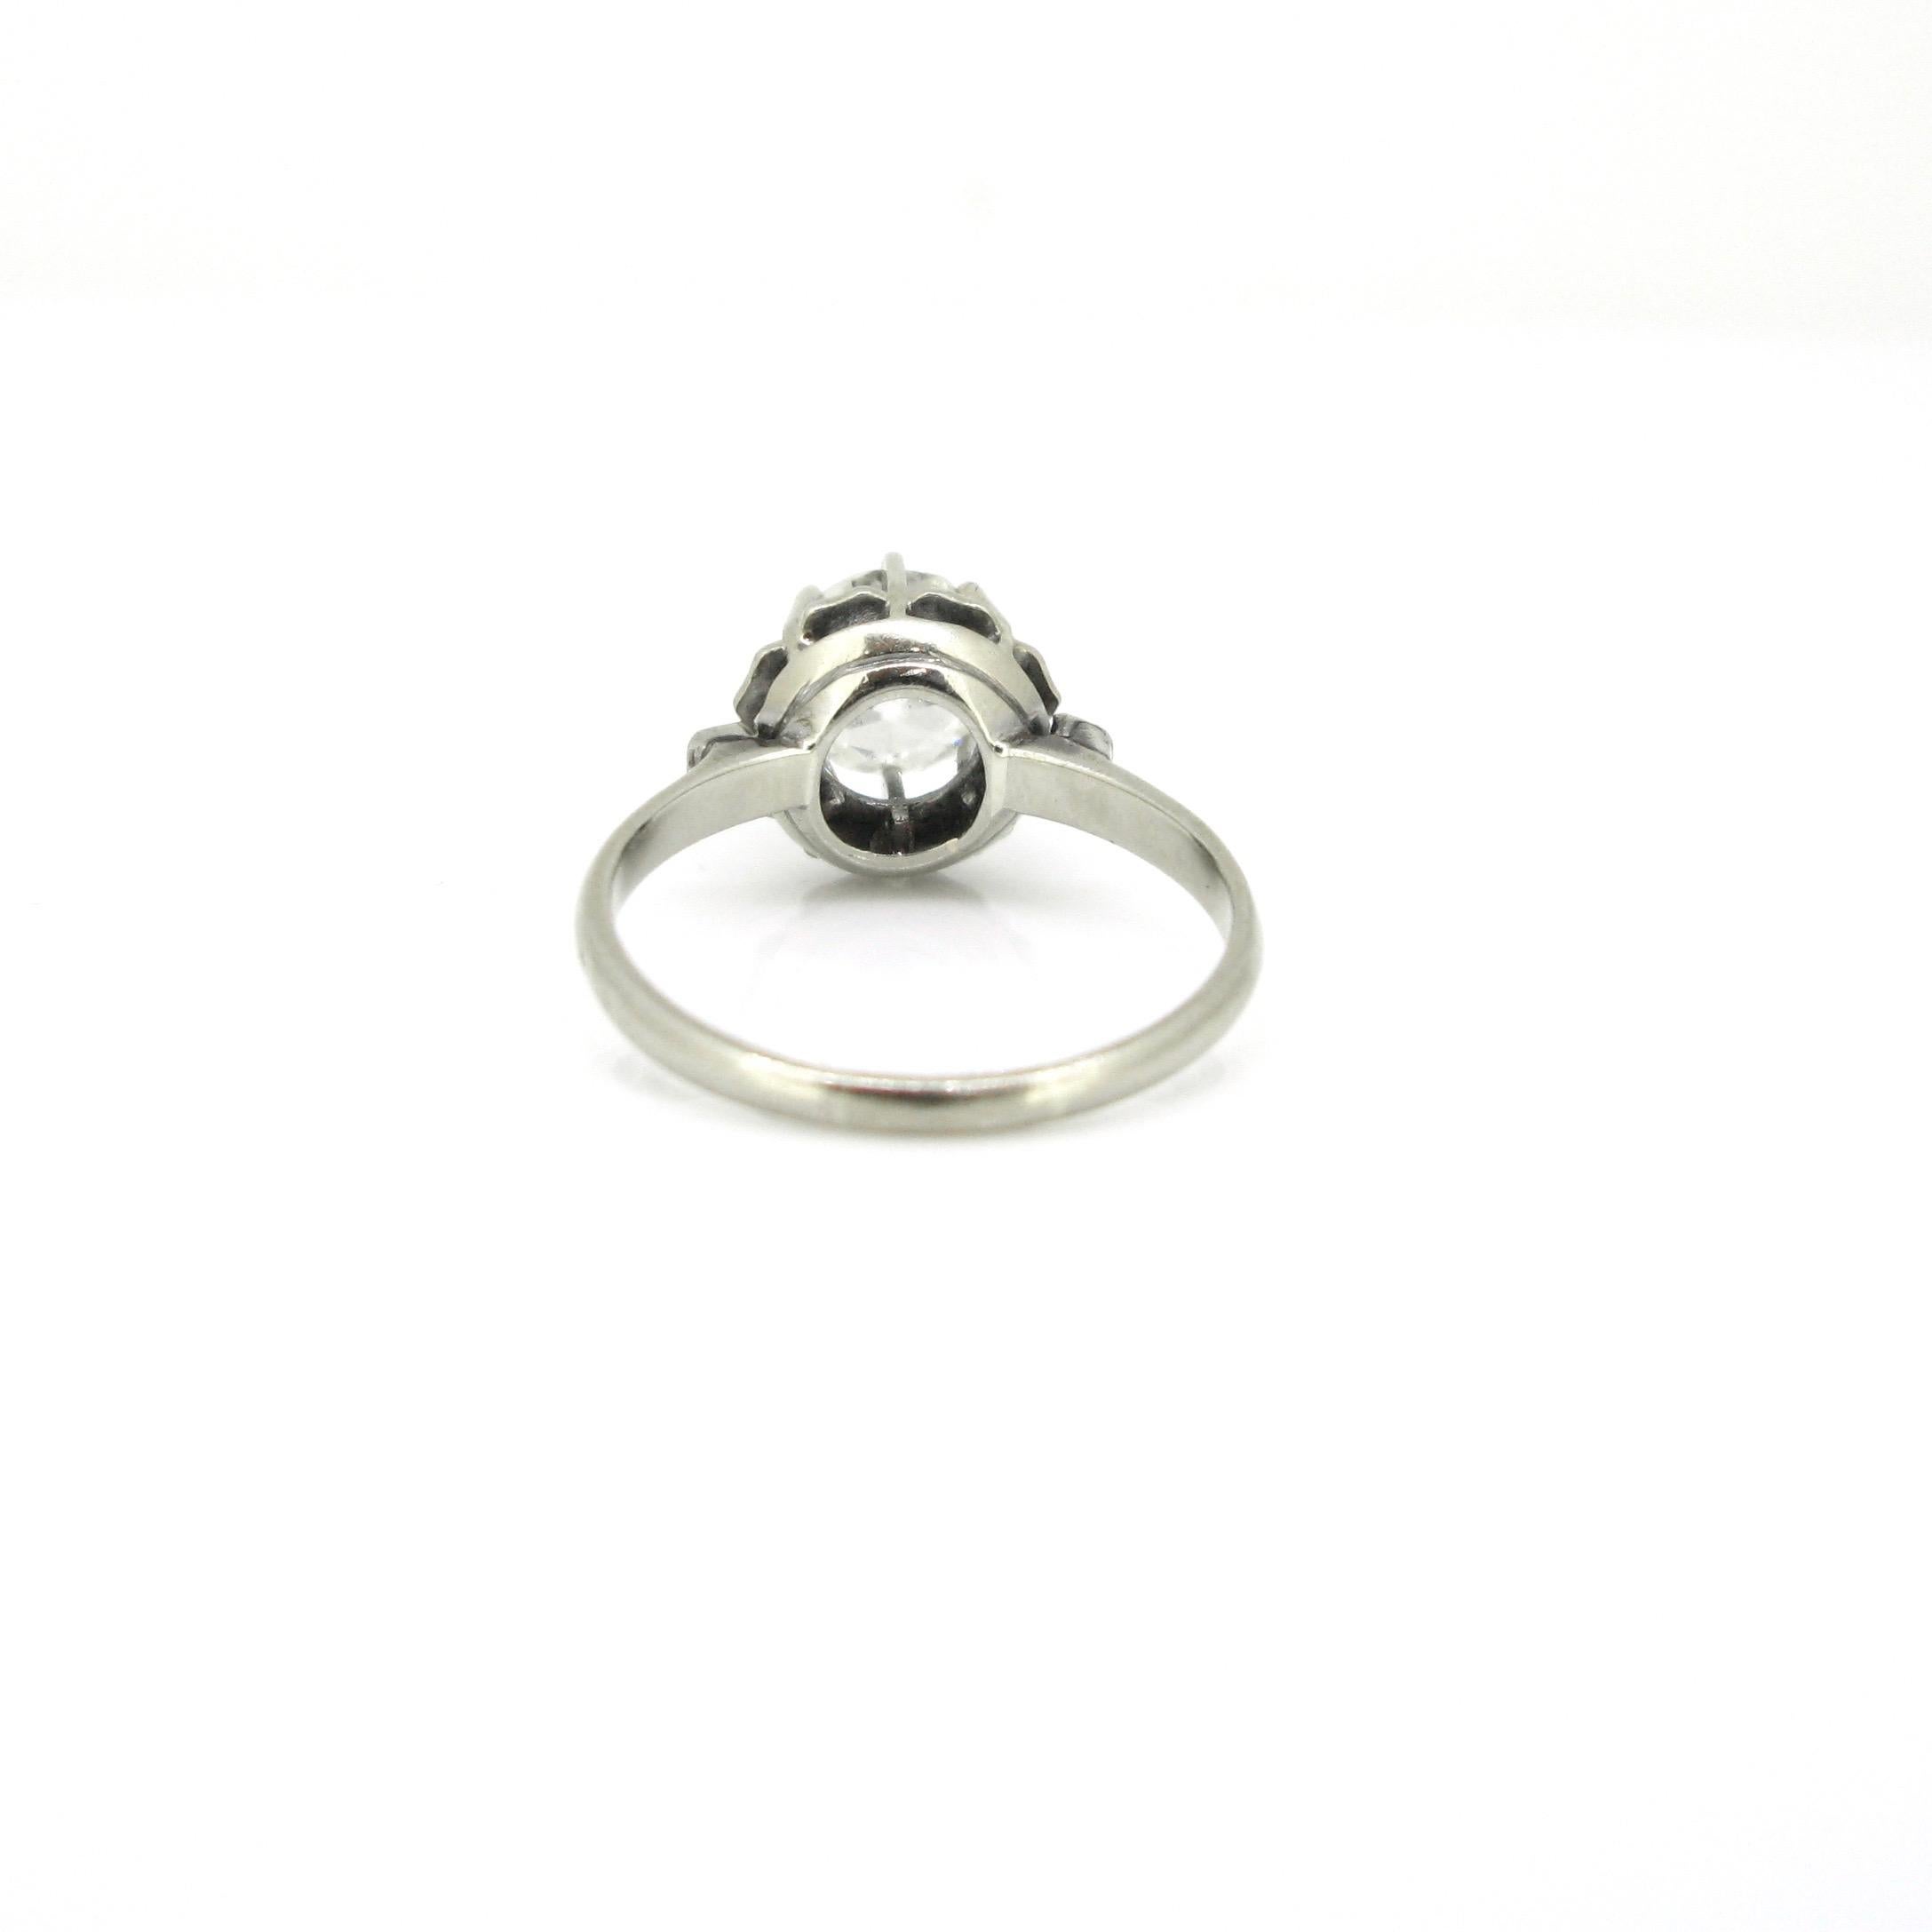 1.25 Carat Old European Cut Diamond Solitaire Art Deco Platinum Ring In Good Condition For Sale In London, GB